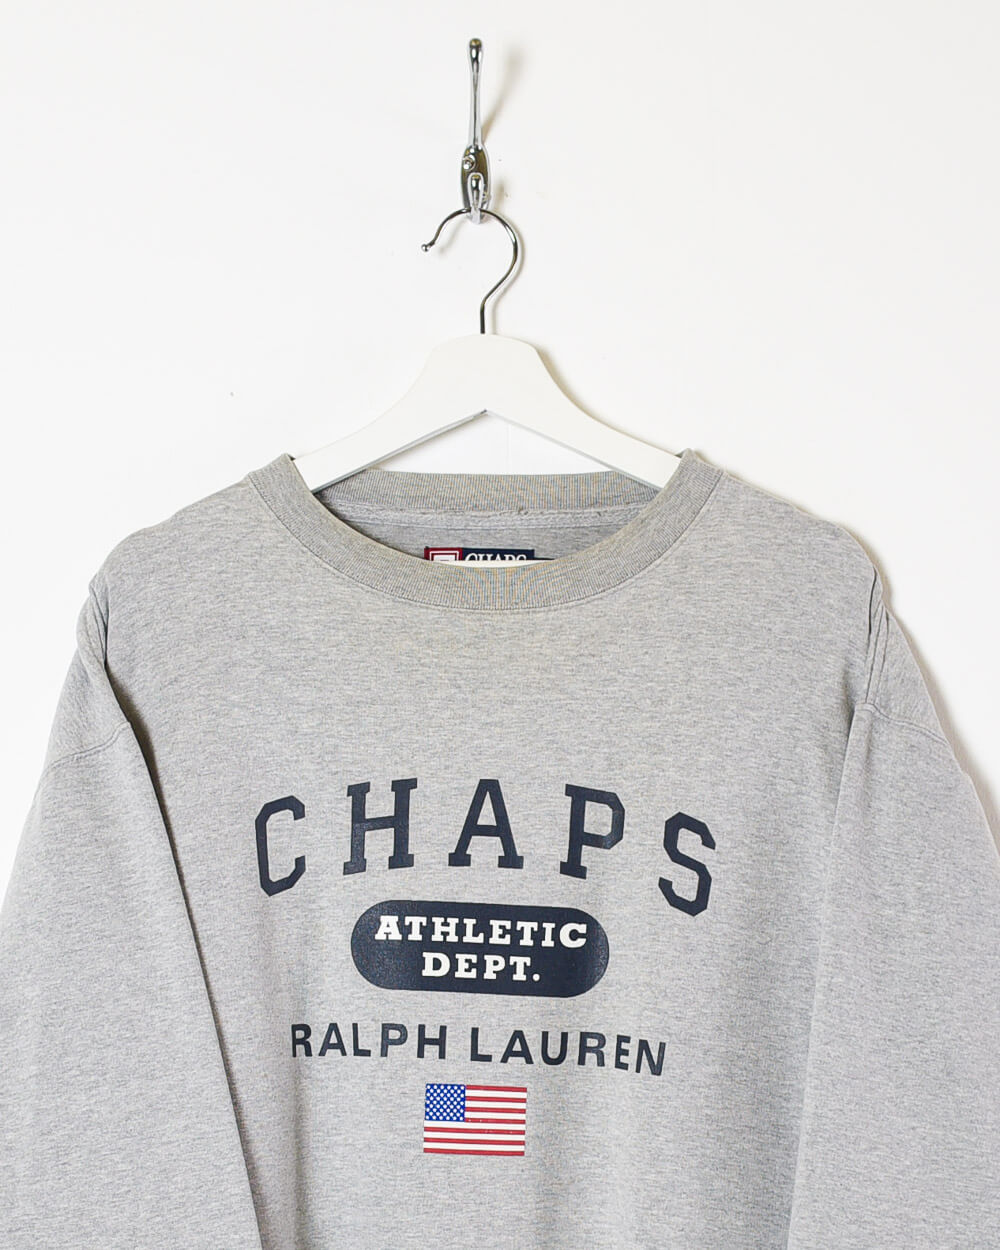 Stone Ralph Lauren Chaps Athletic Dept Sweatshirt - X-Large